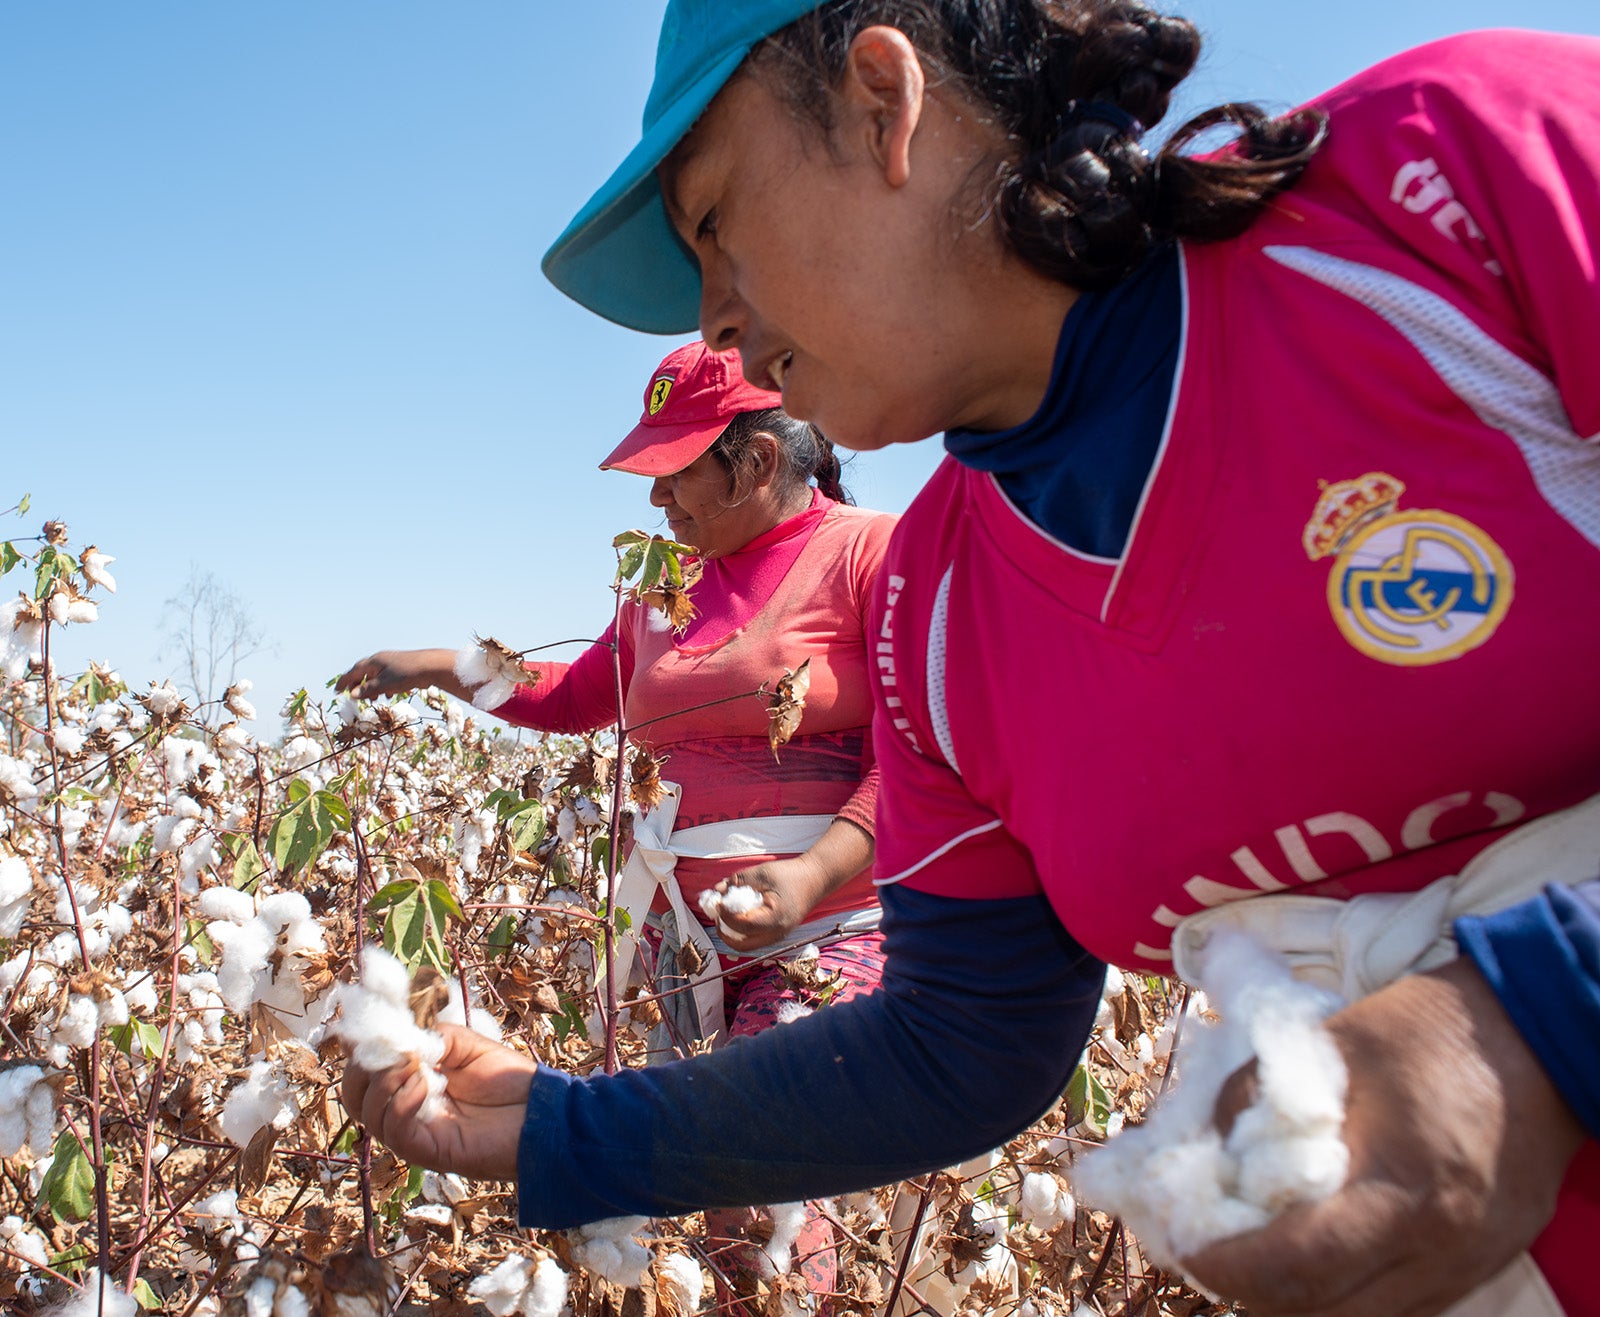 organic cotton clothing - pima cotton from Peru - ethically made fair trade cotton